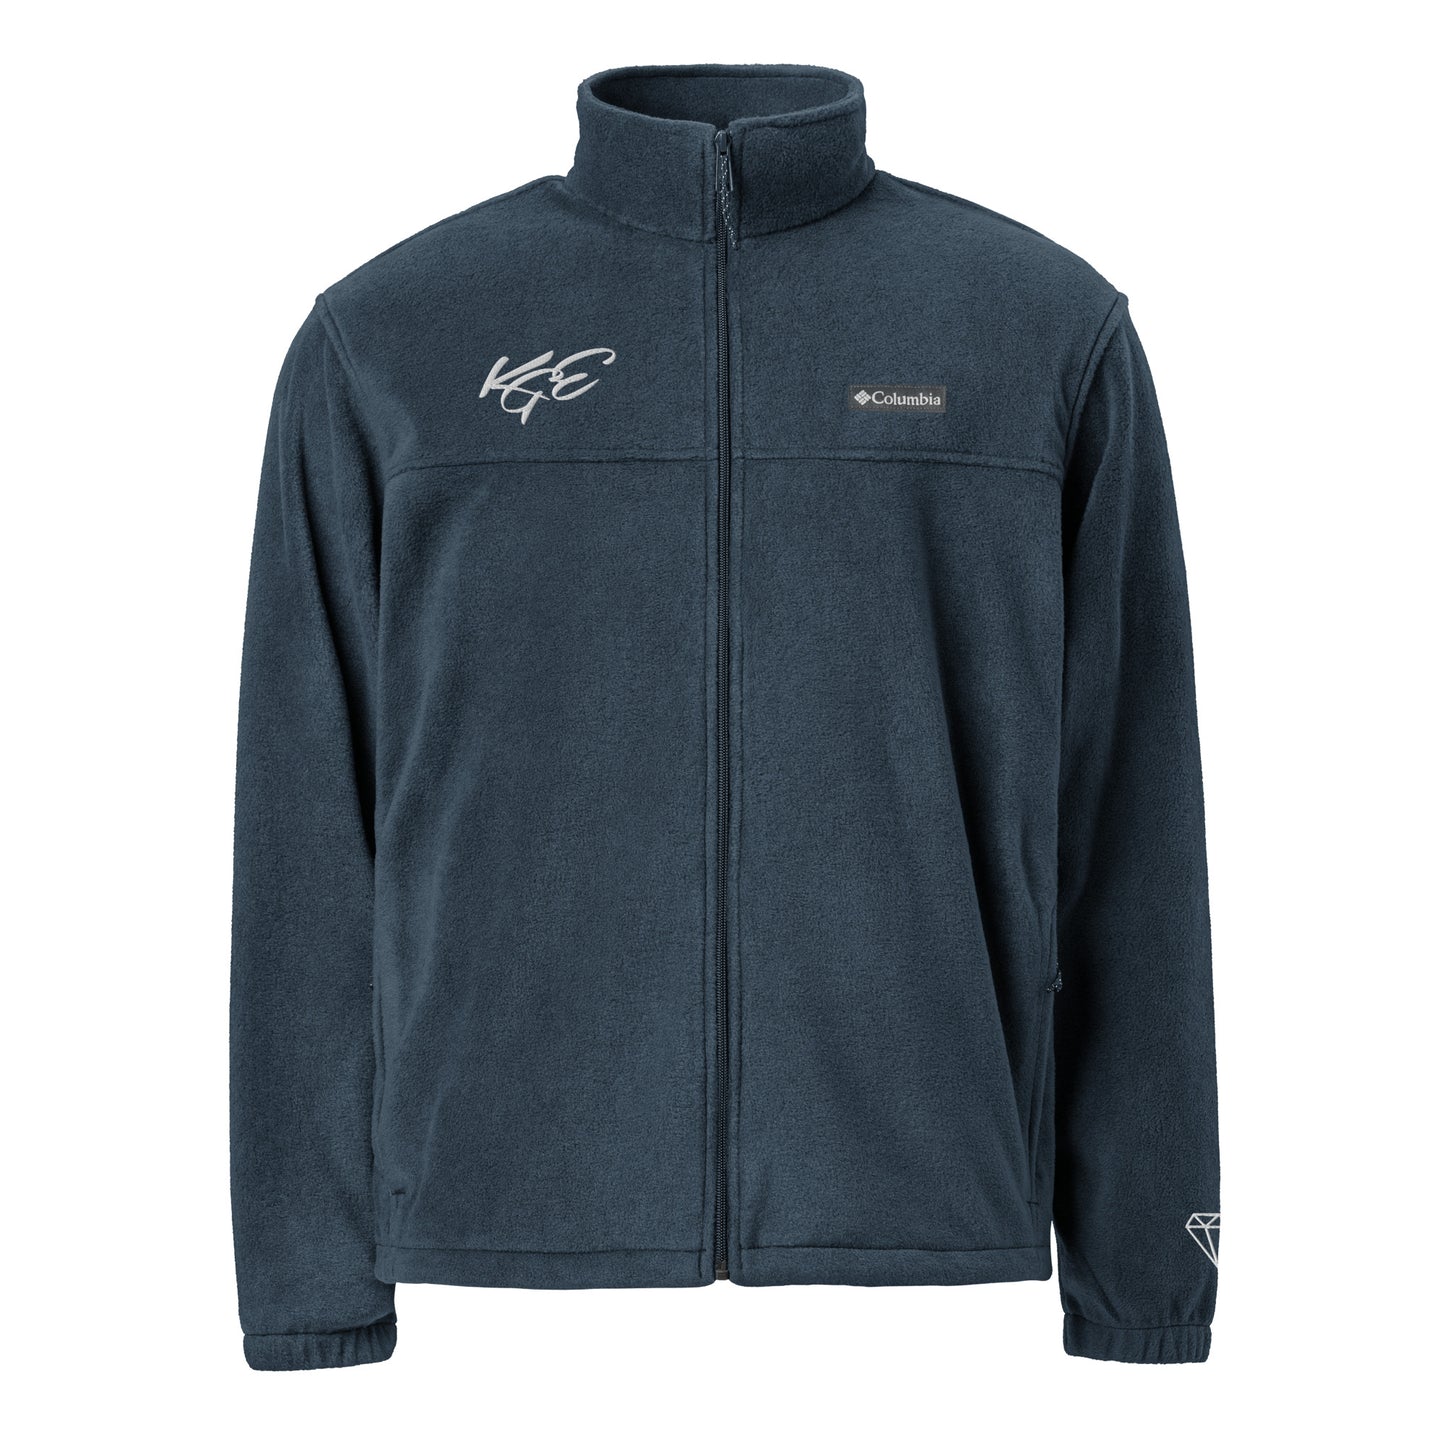 (New) KGE Unlid Unisex Columbia fleece jacket (Limited Edition)